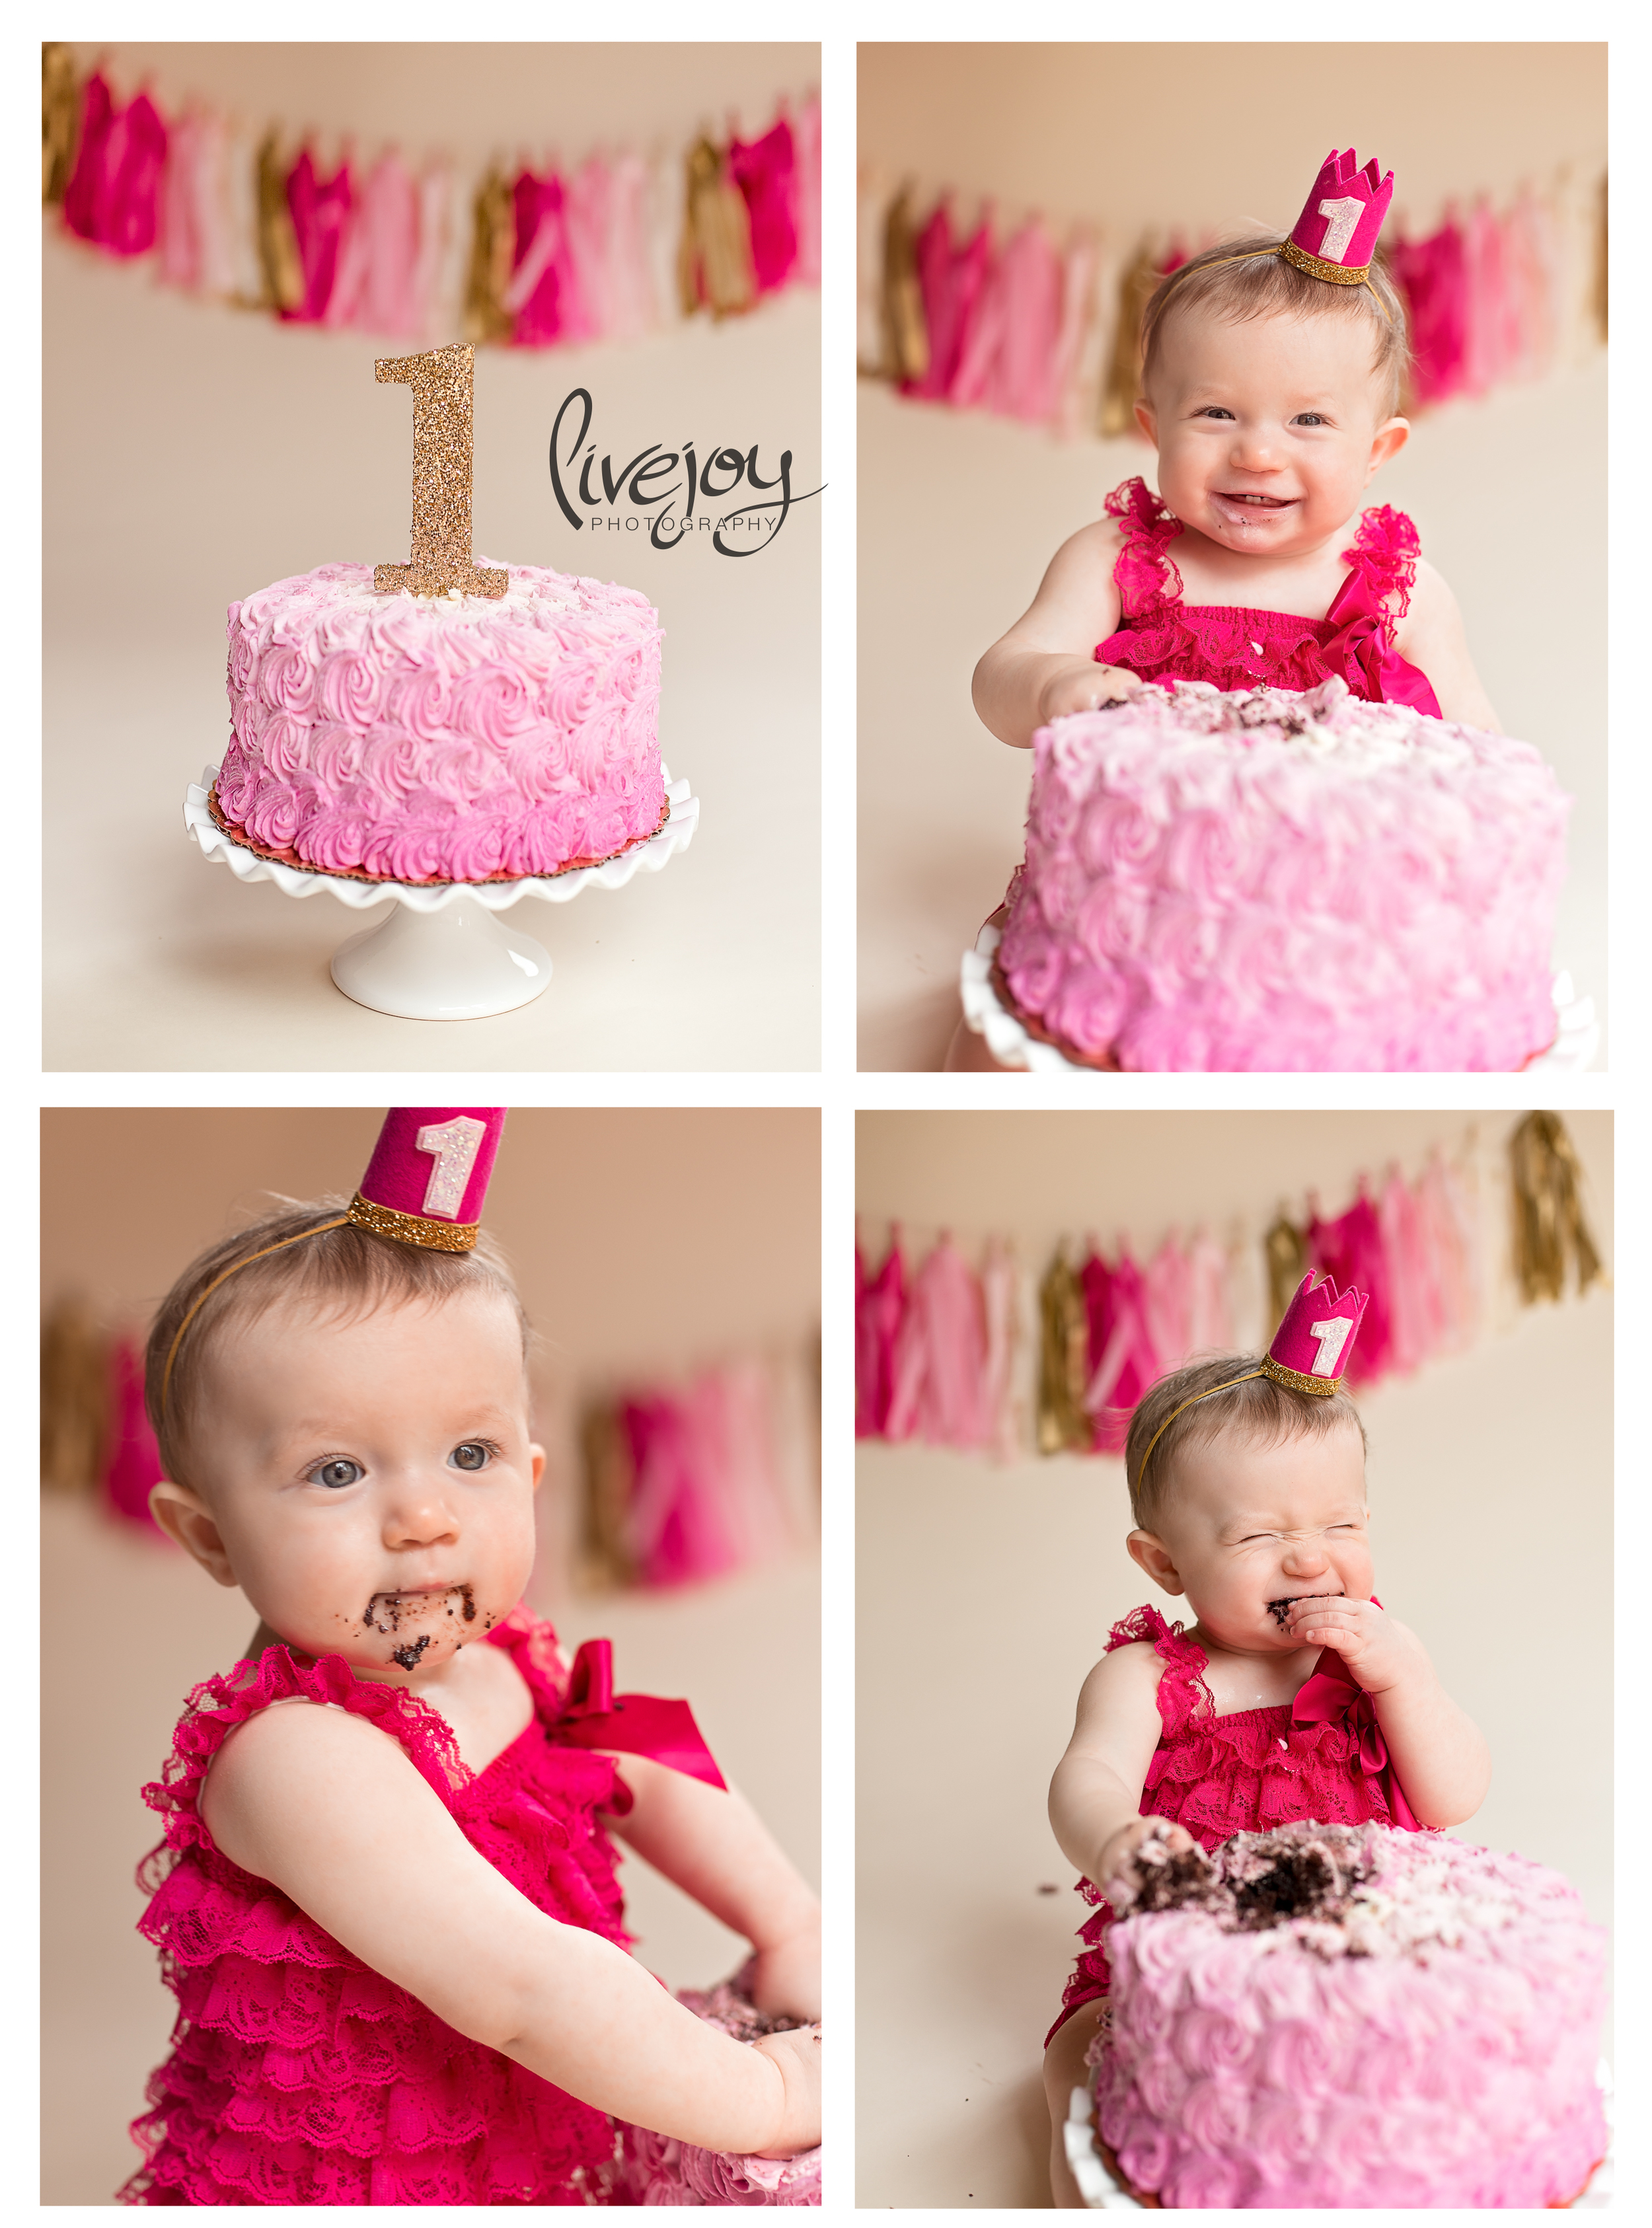 1 Year and Cake Smash Baby Photography | Oregon | LiveJoy Photography